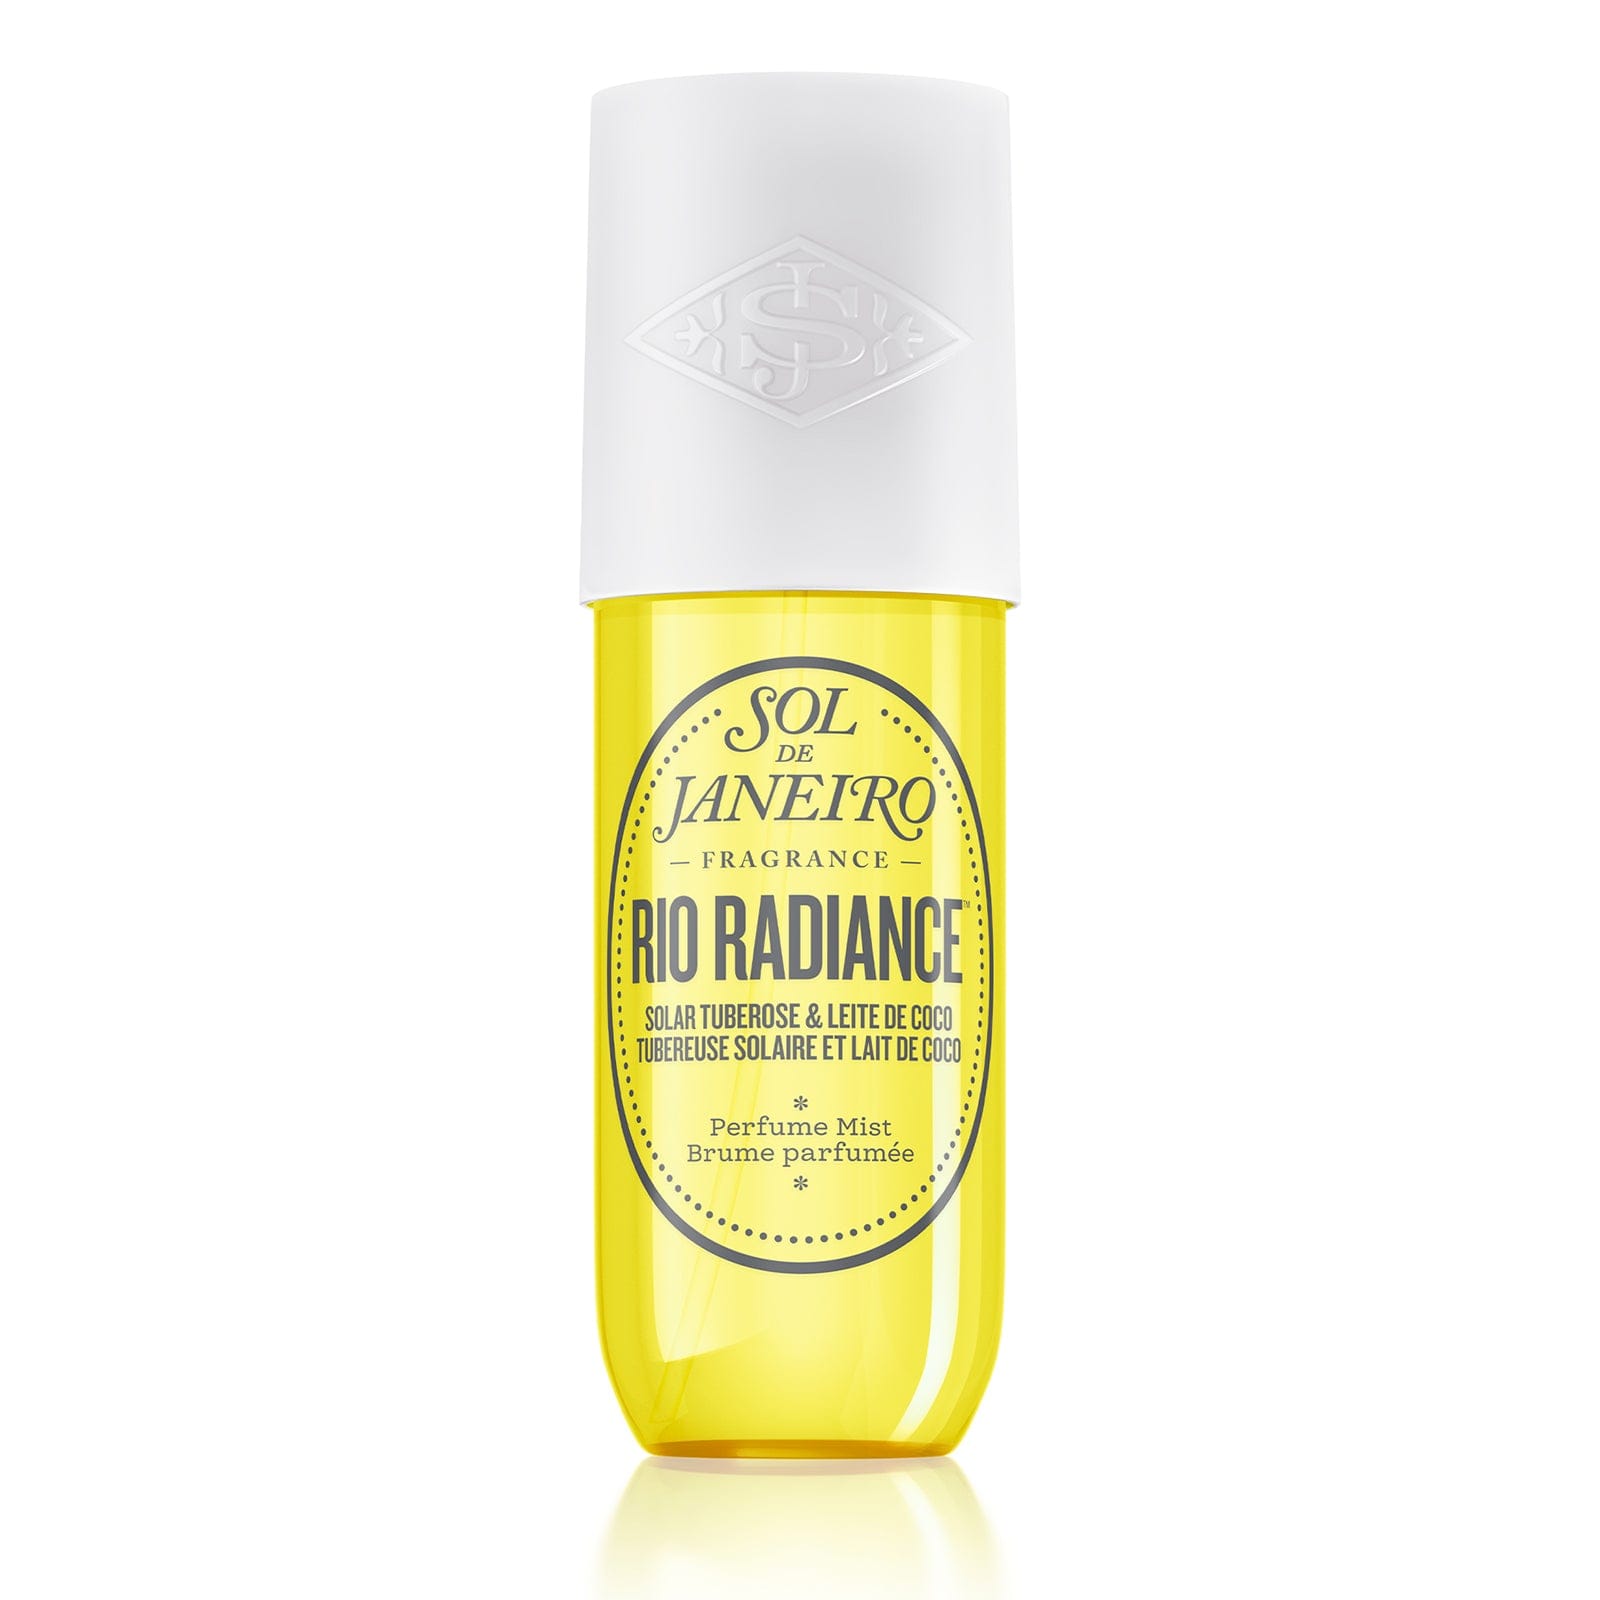 Rio Radiance perfume mist, 240mL size | Sol de Janeiro